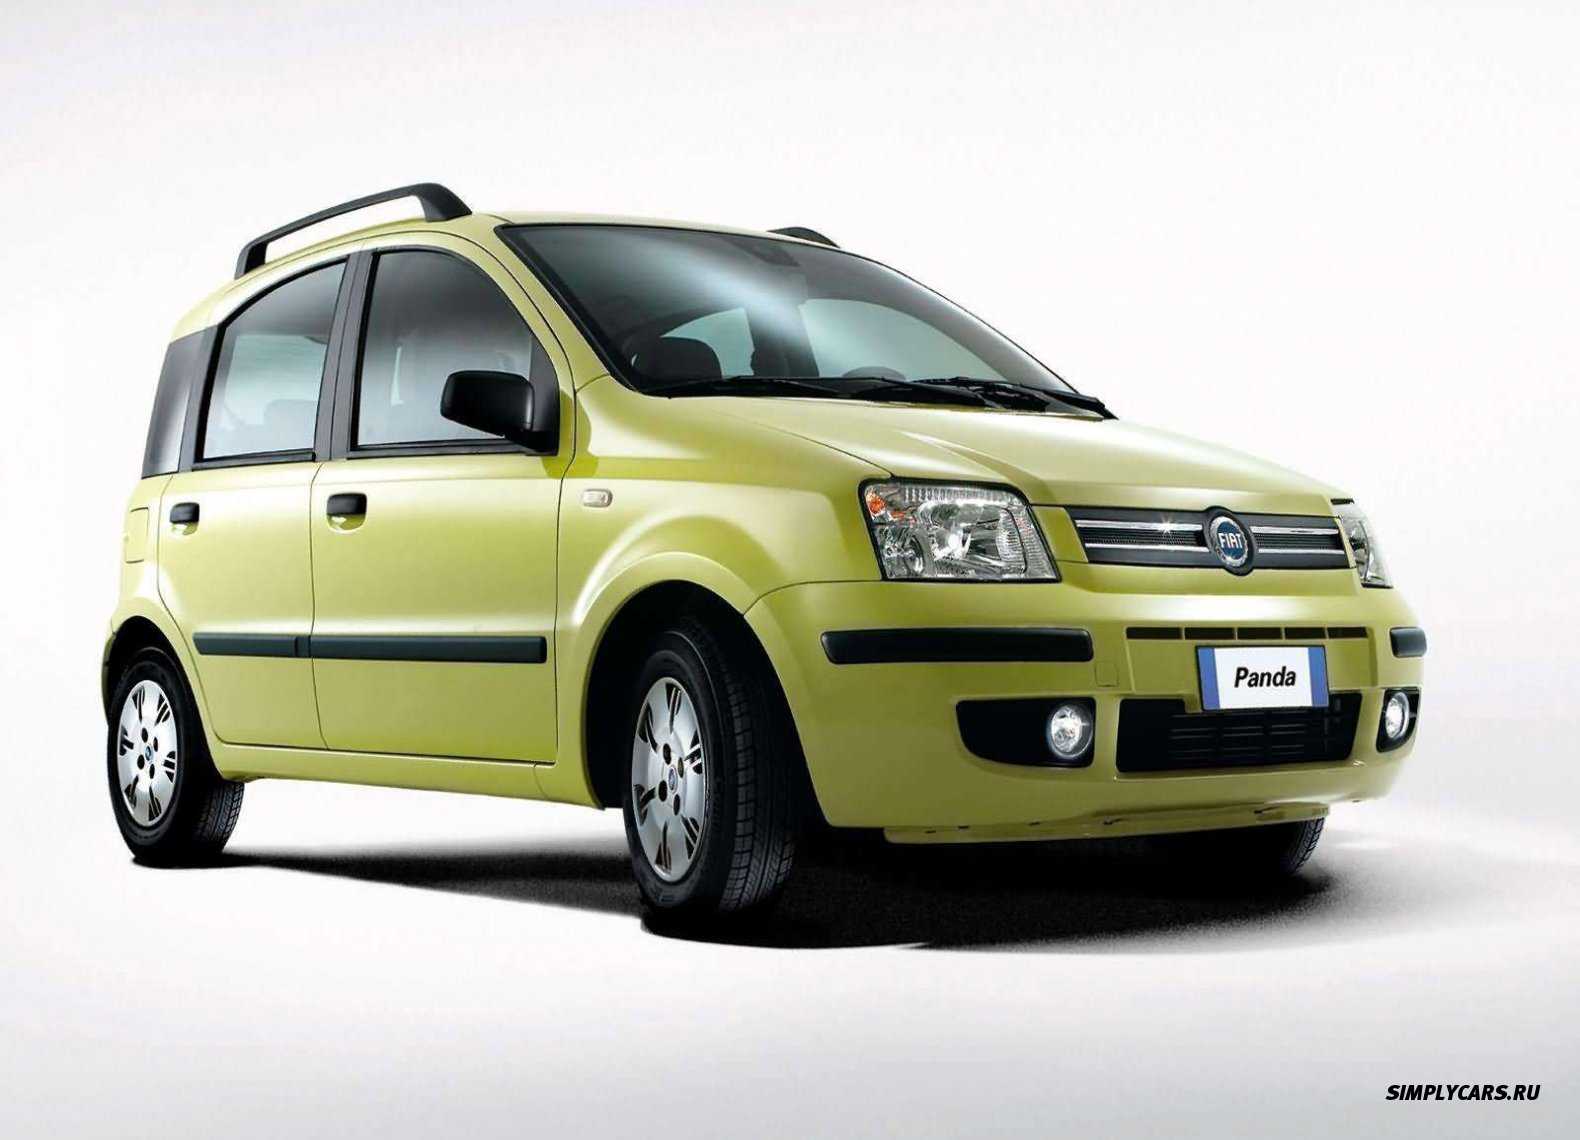 Fiat panda ii (2003-2012) - проблемы и неисправности